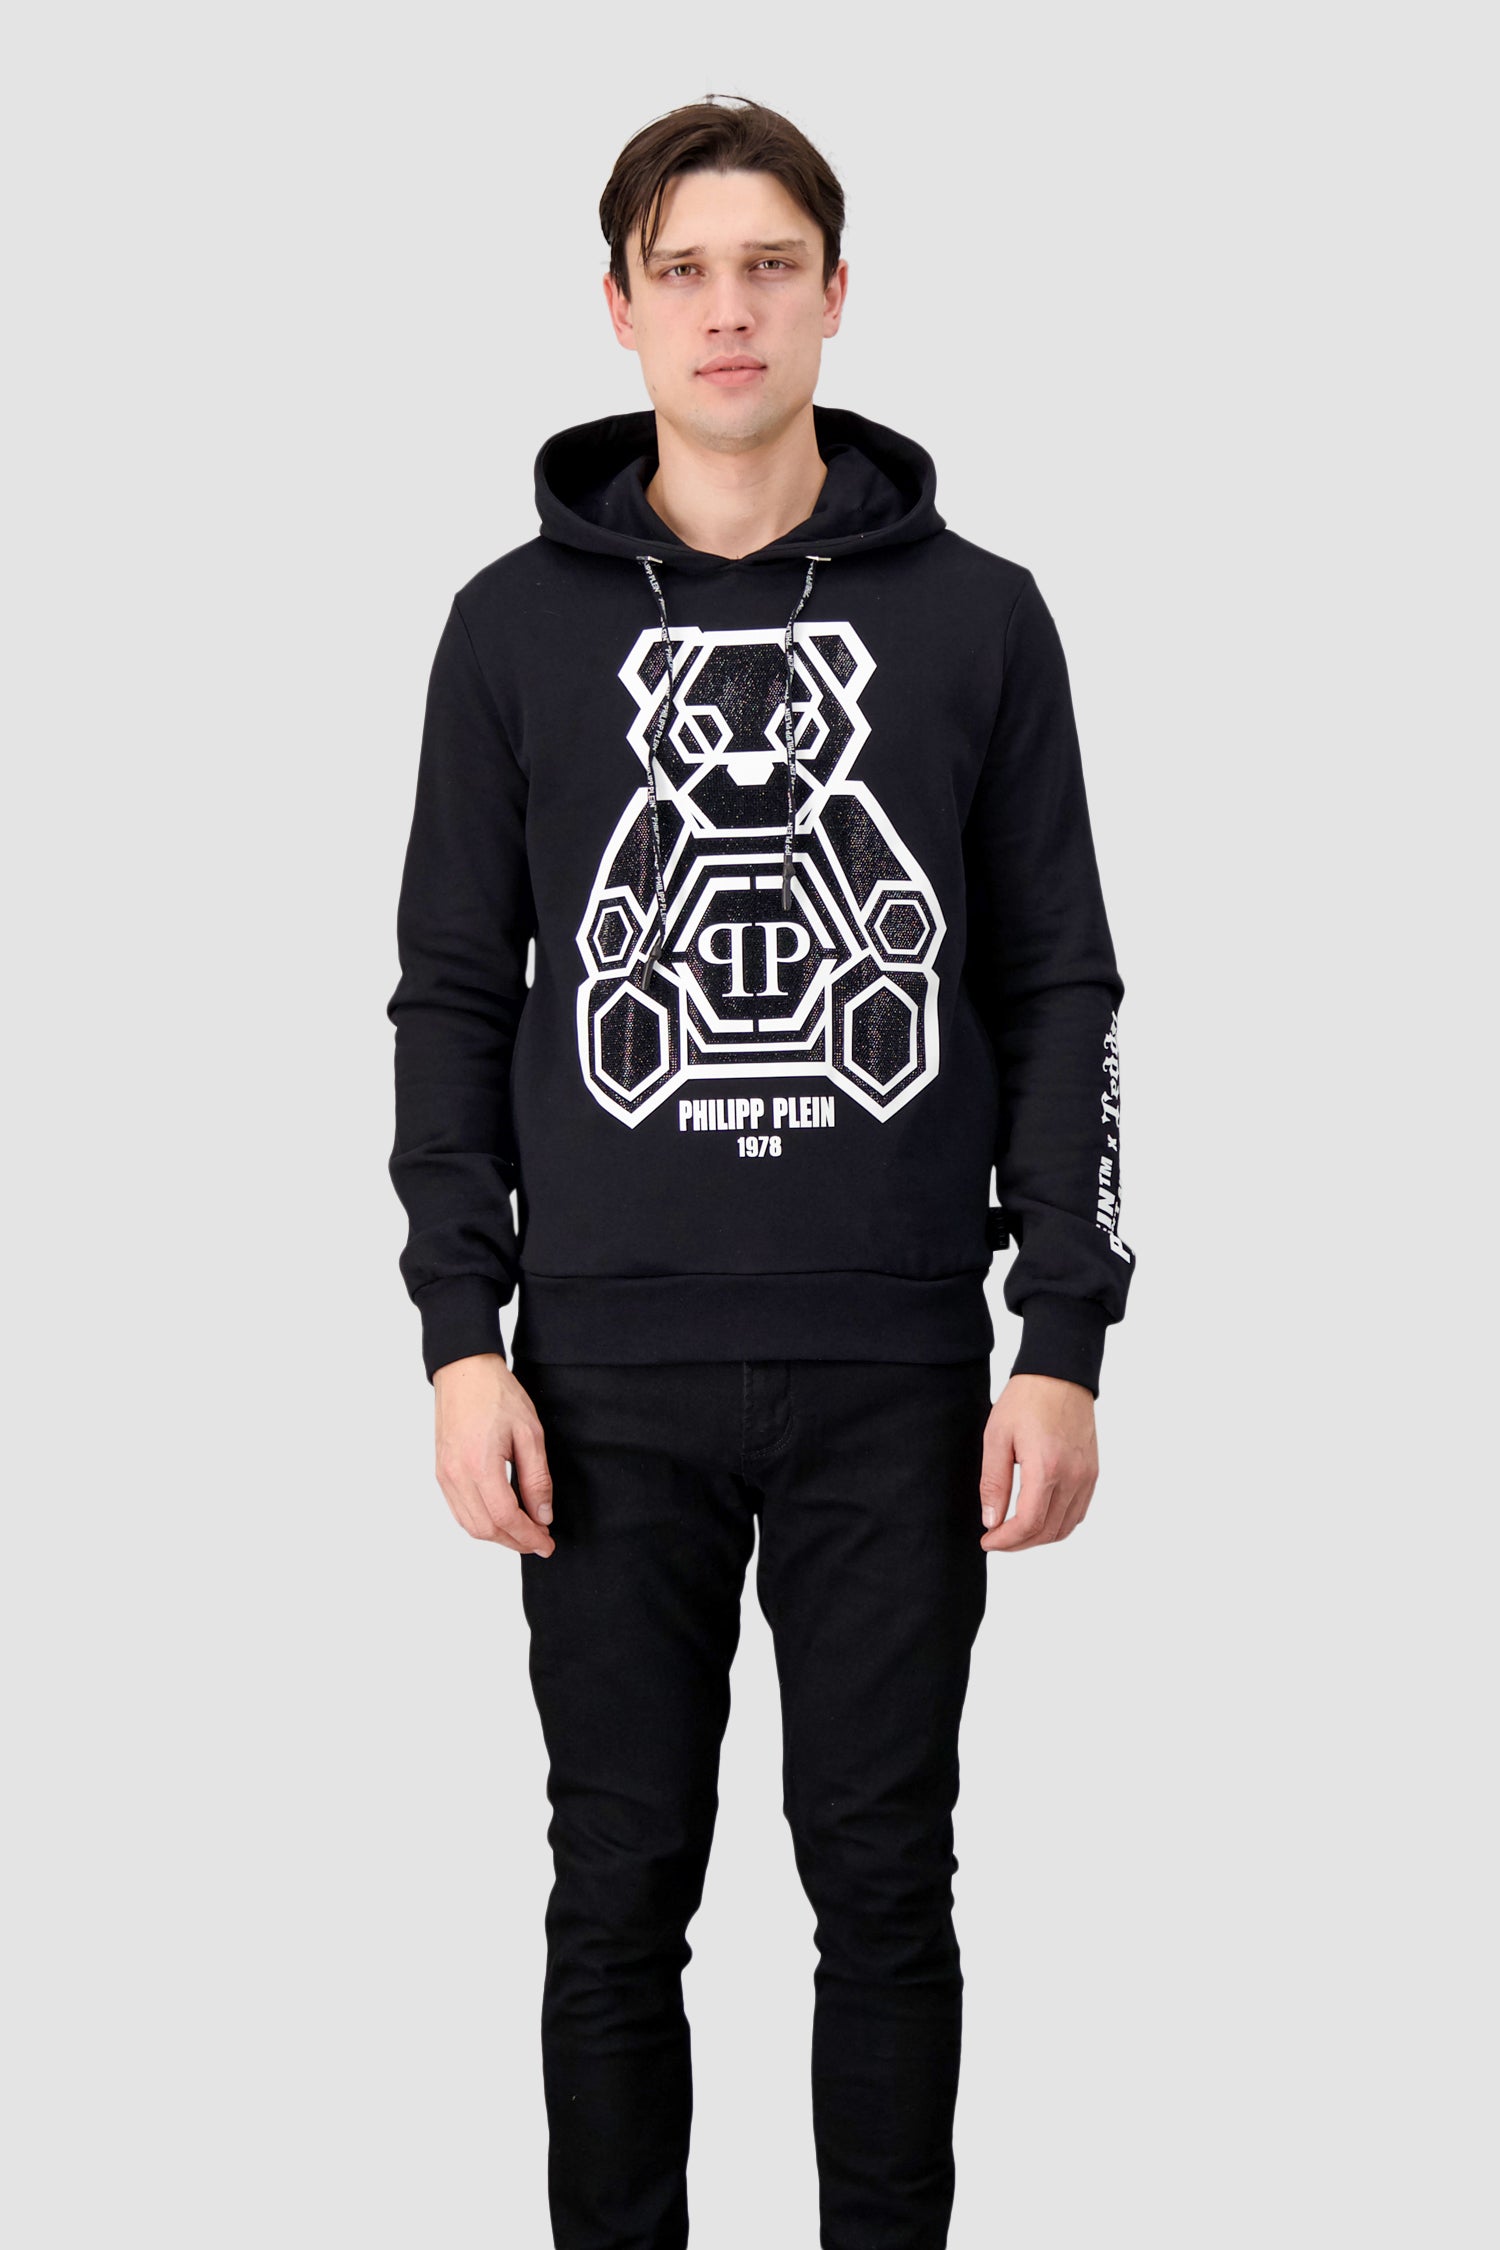 Philipp Plein Sweatshirt Teddy Bear Black Hoodie